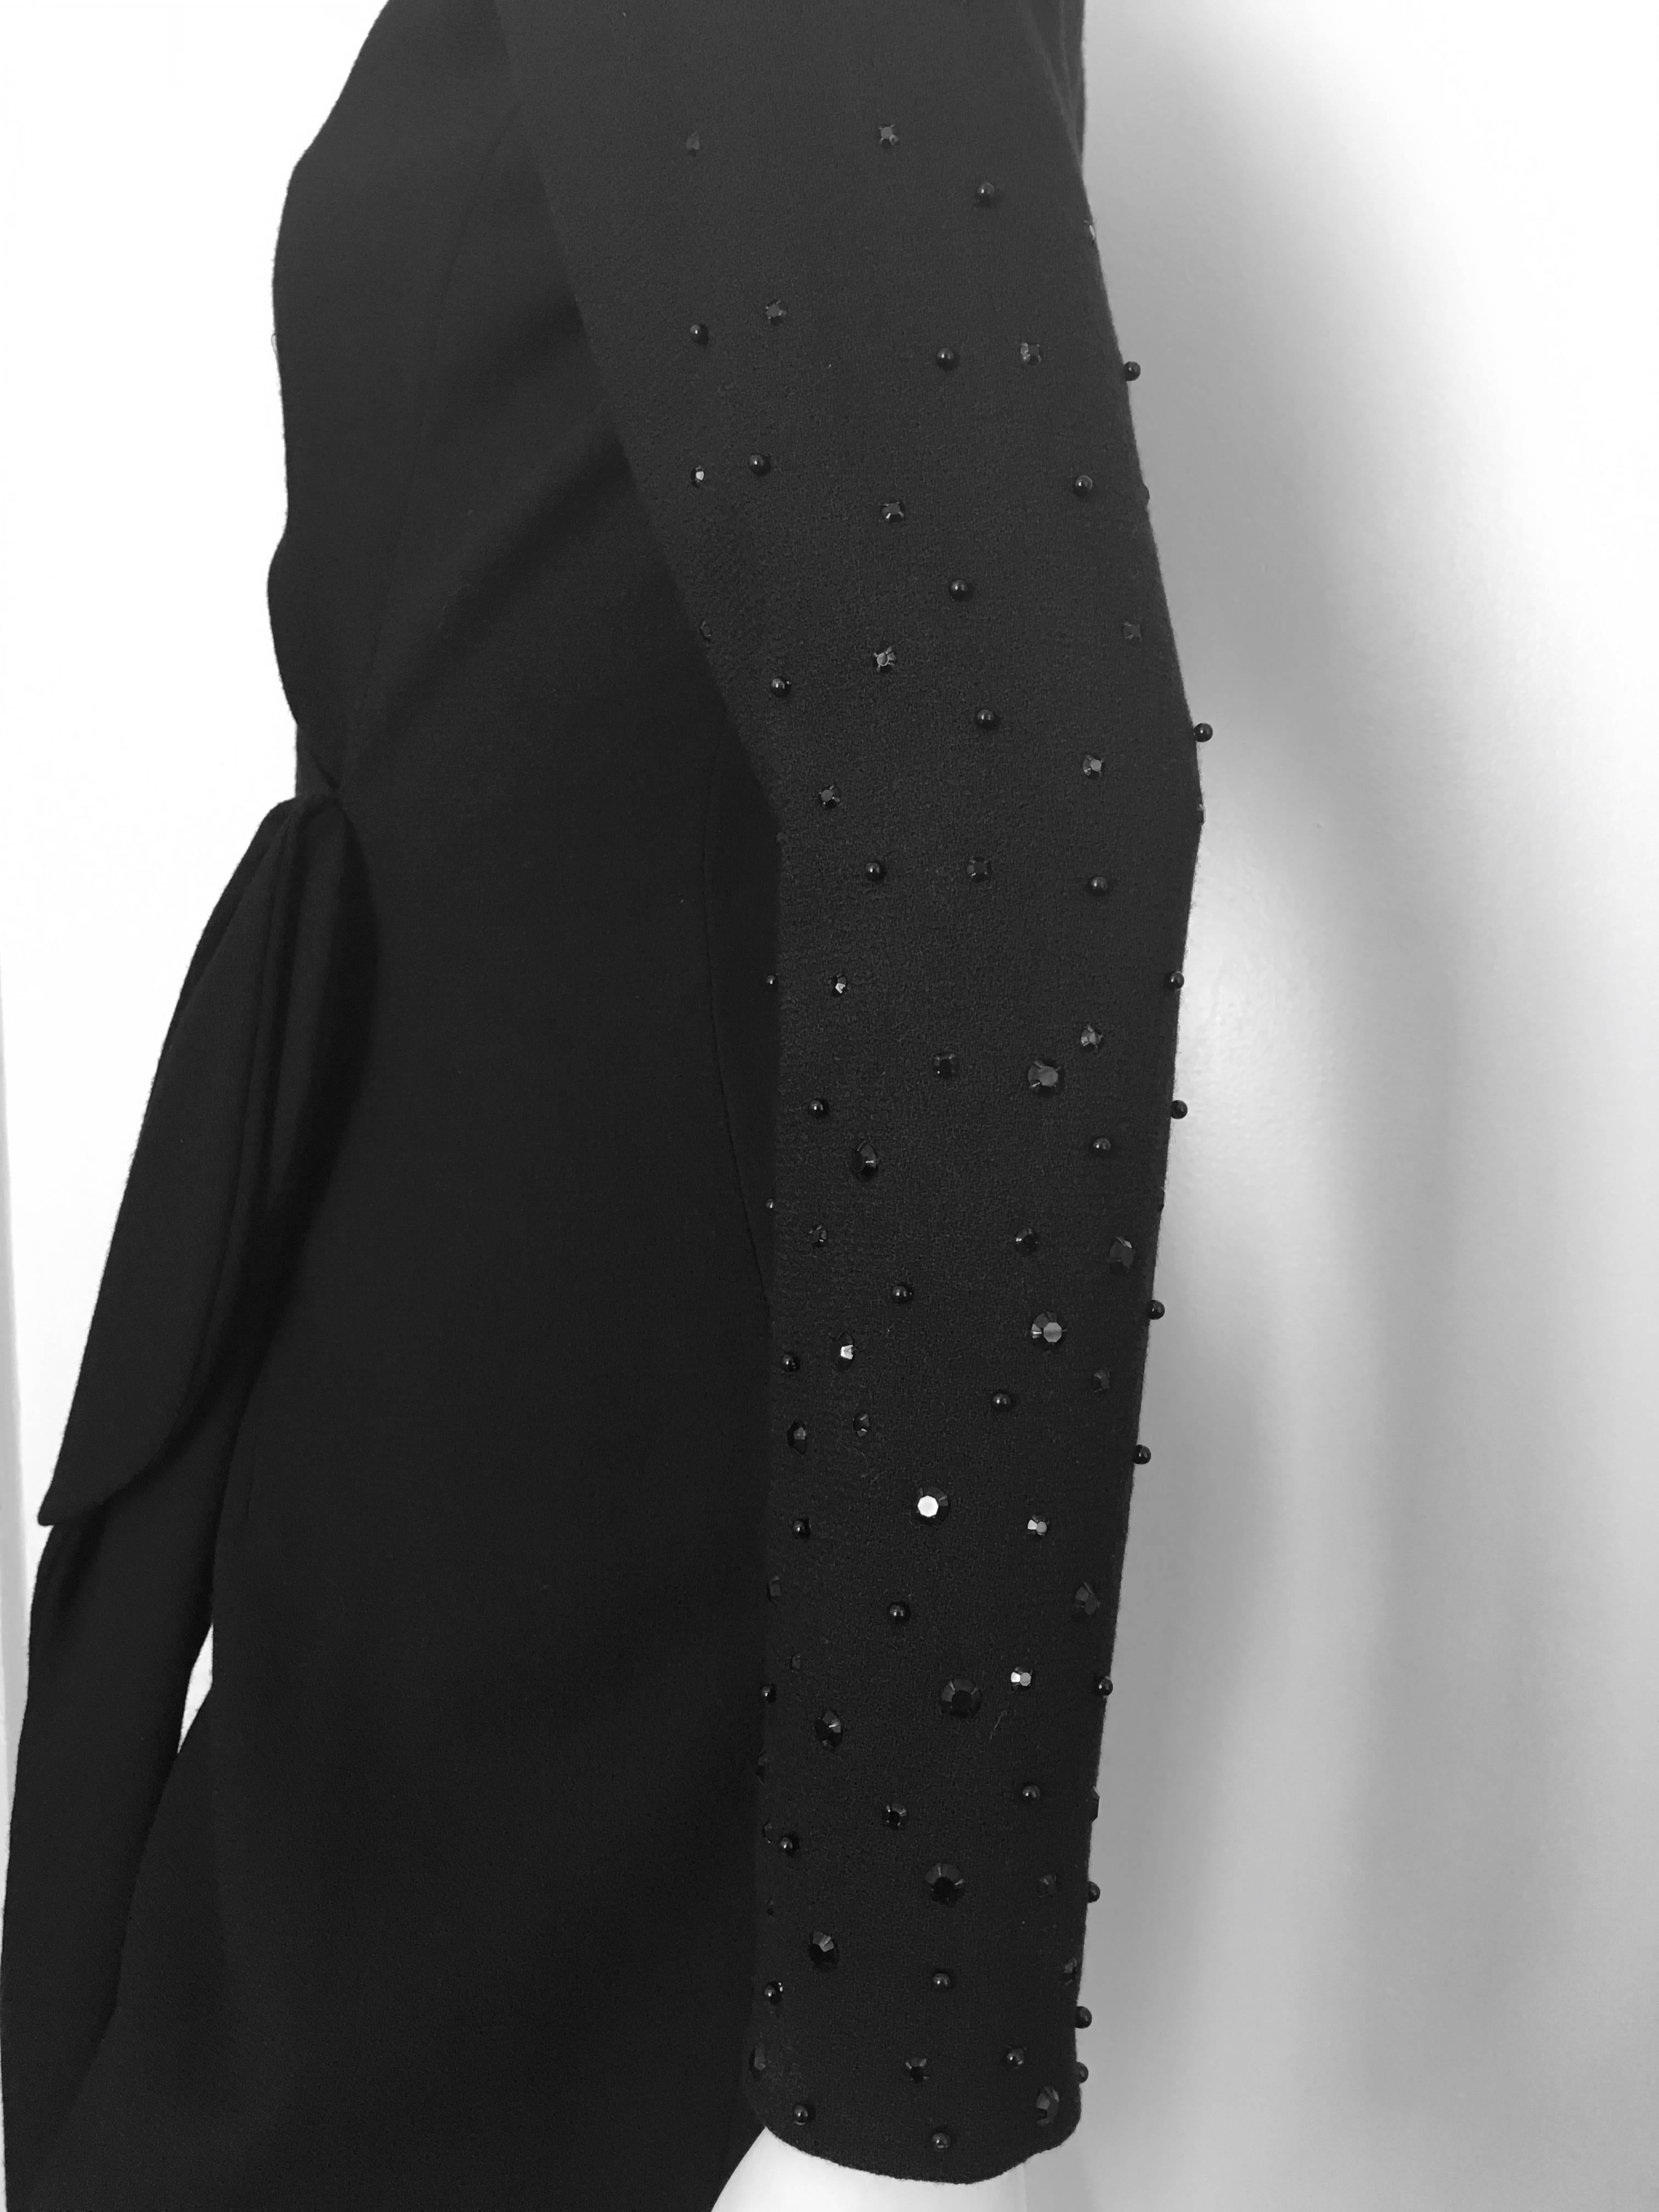 Carolina Herrera for Neiman Marcus Black Wool Cocktail Dress Size 6  For Sale 1